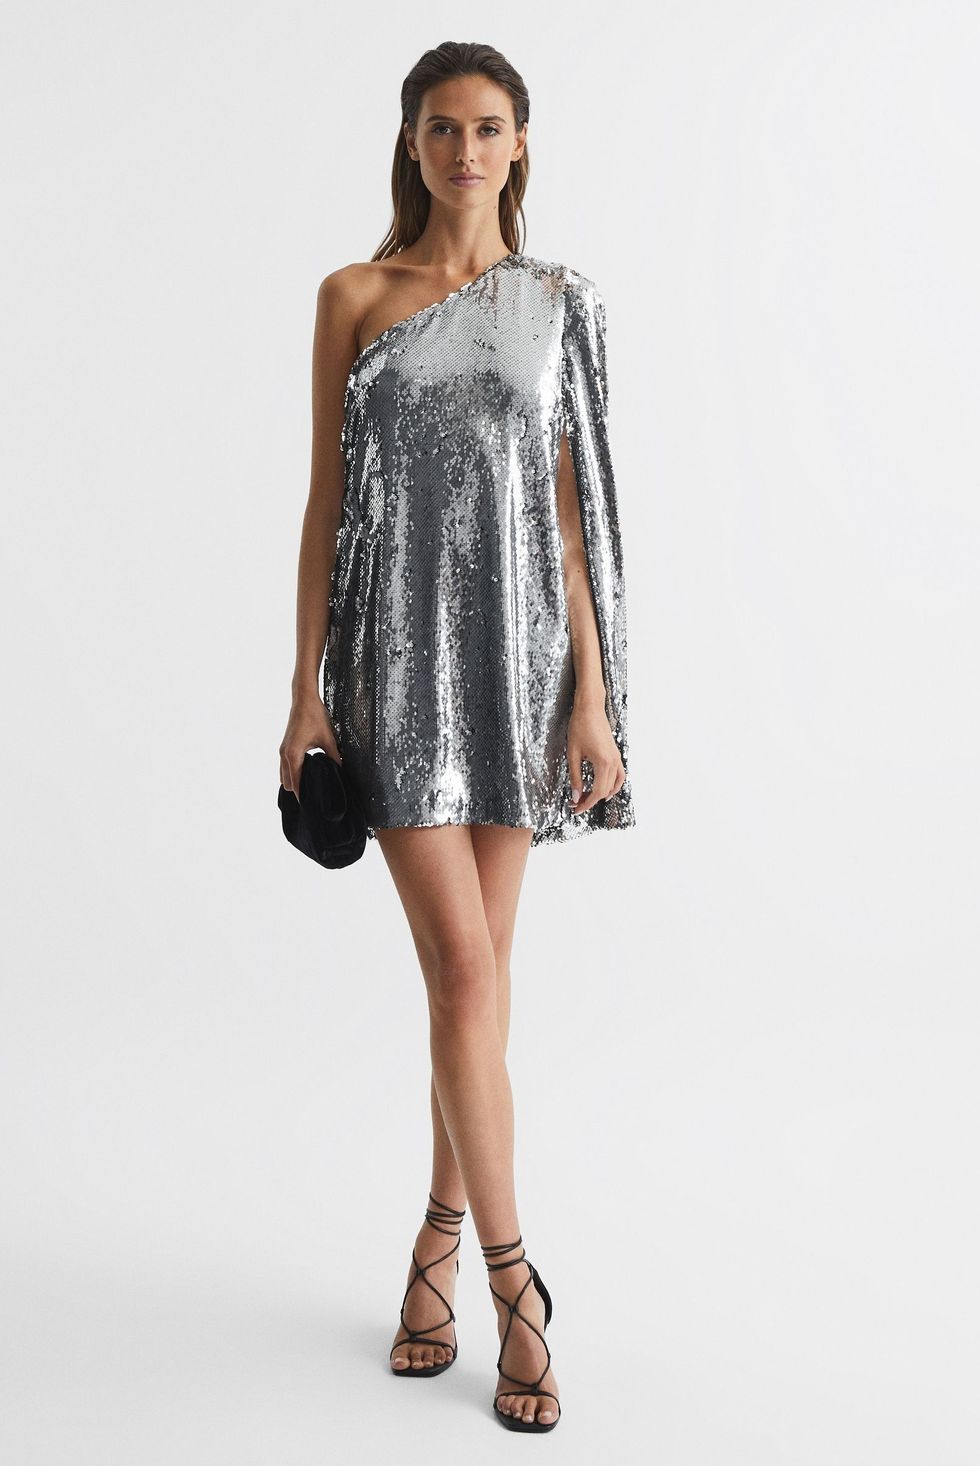 Nicole Scherzinger's silver ABBA dress is everything